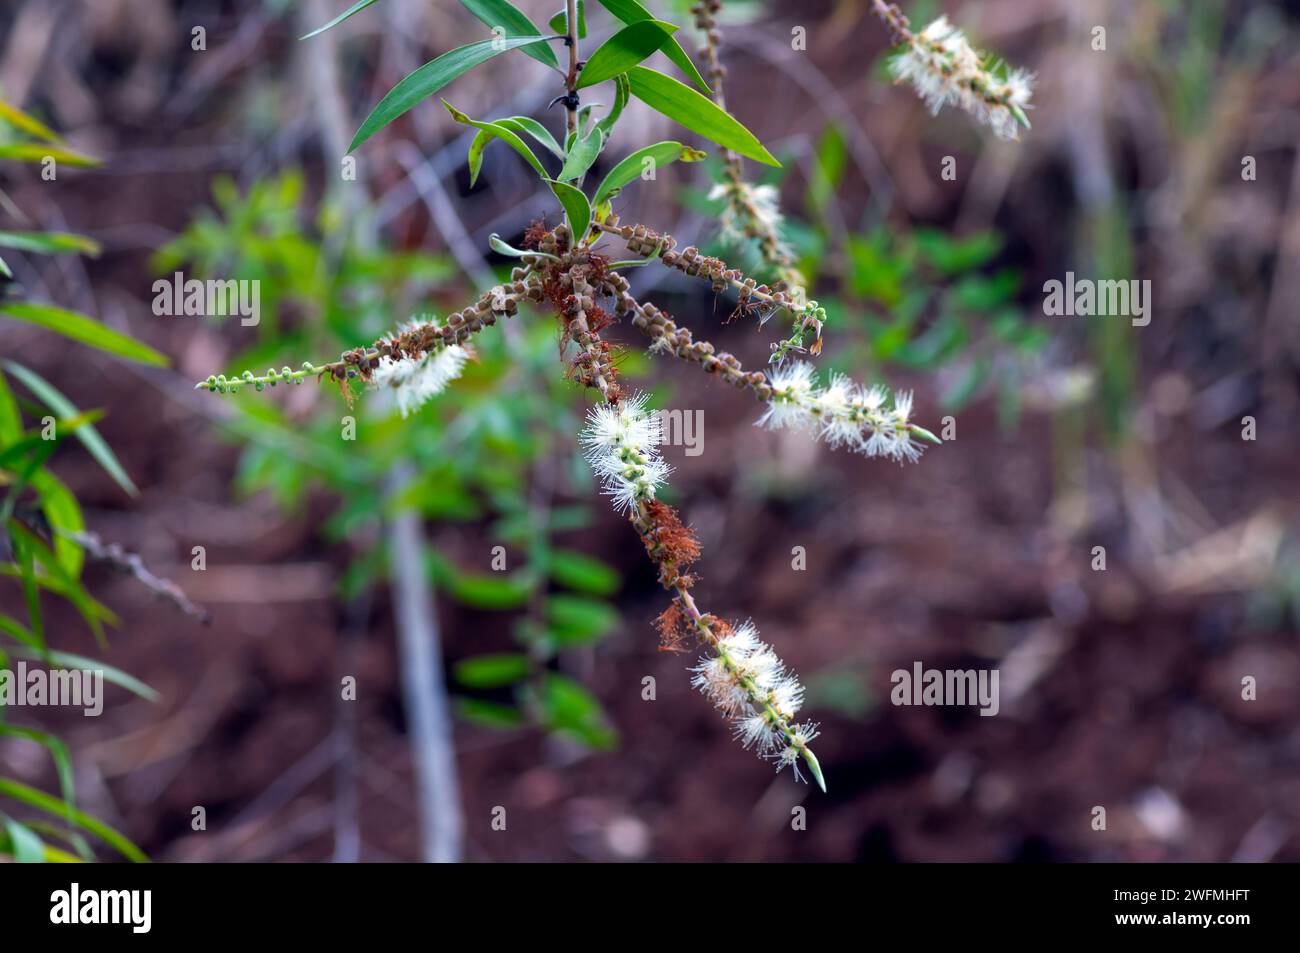 Melaleuca cajuputi flowers, Cajuput, in the Cajuput forest, Gunung Kidul, Yogyakarta, Indonesia. Stock Photo